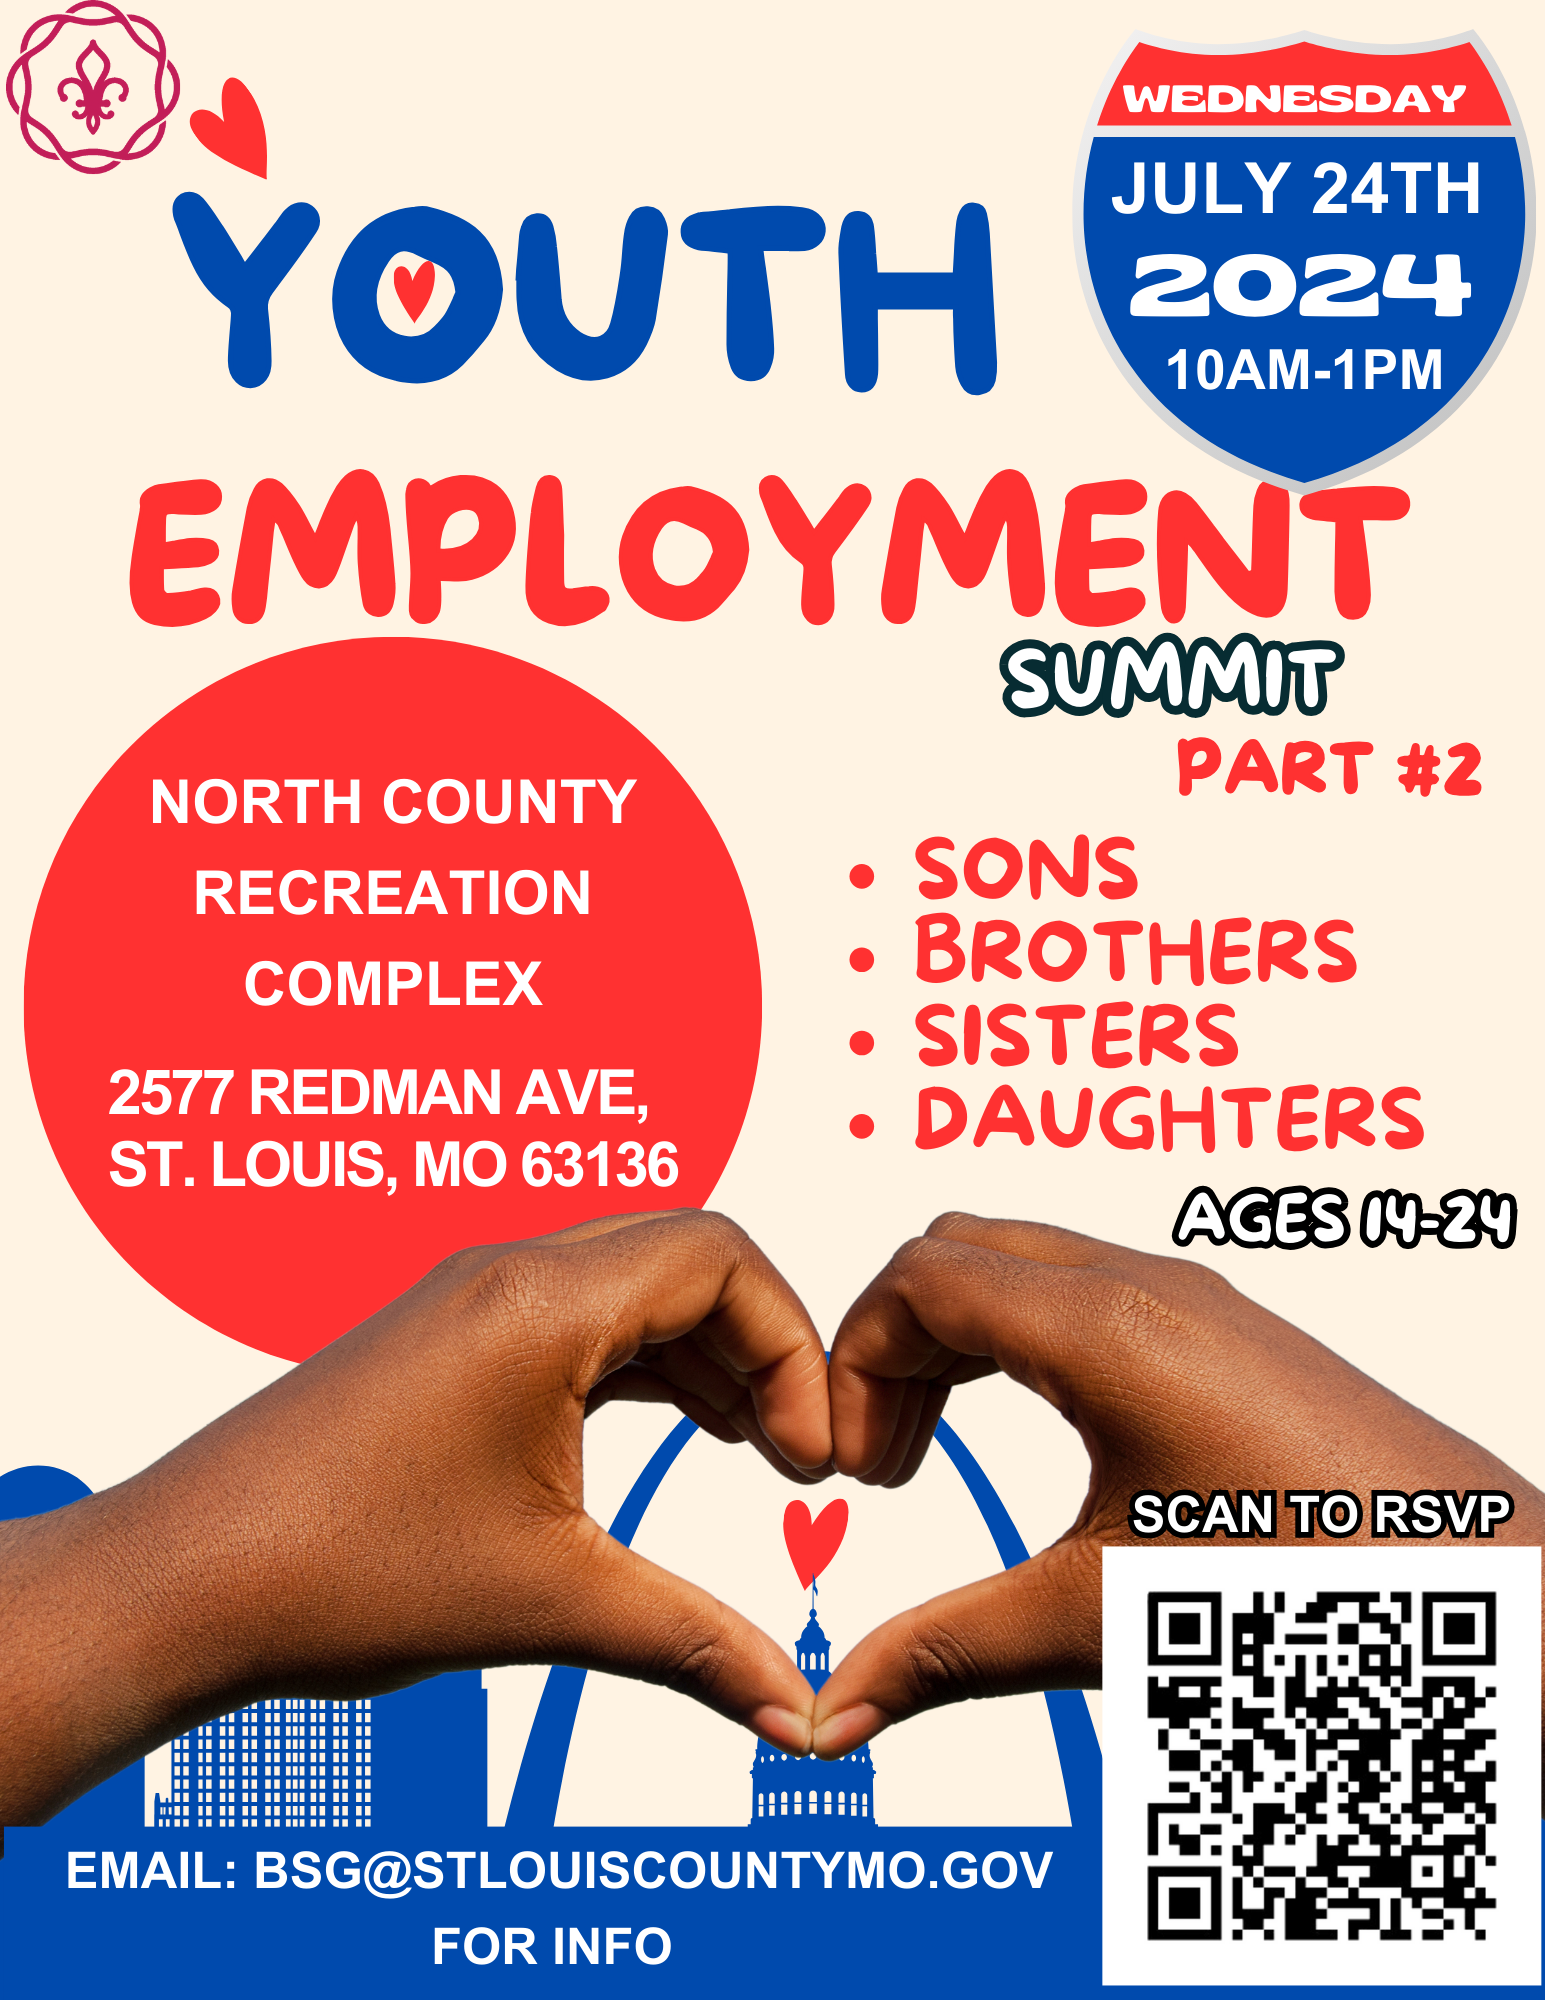 Youth Employment Summit Part #2